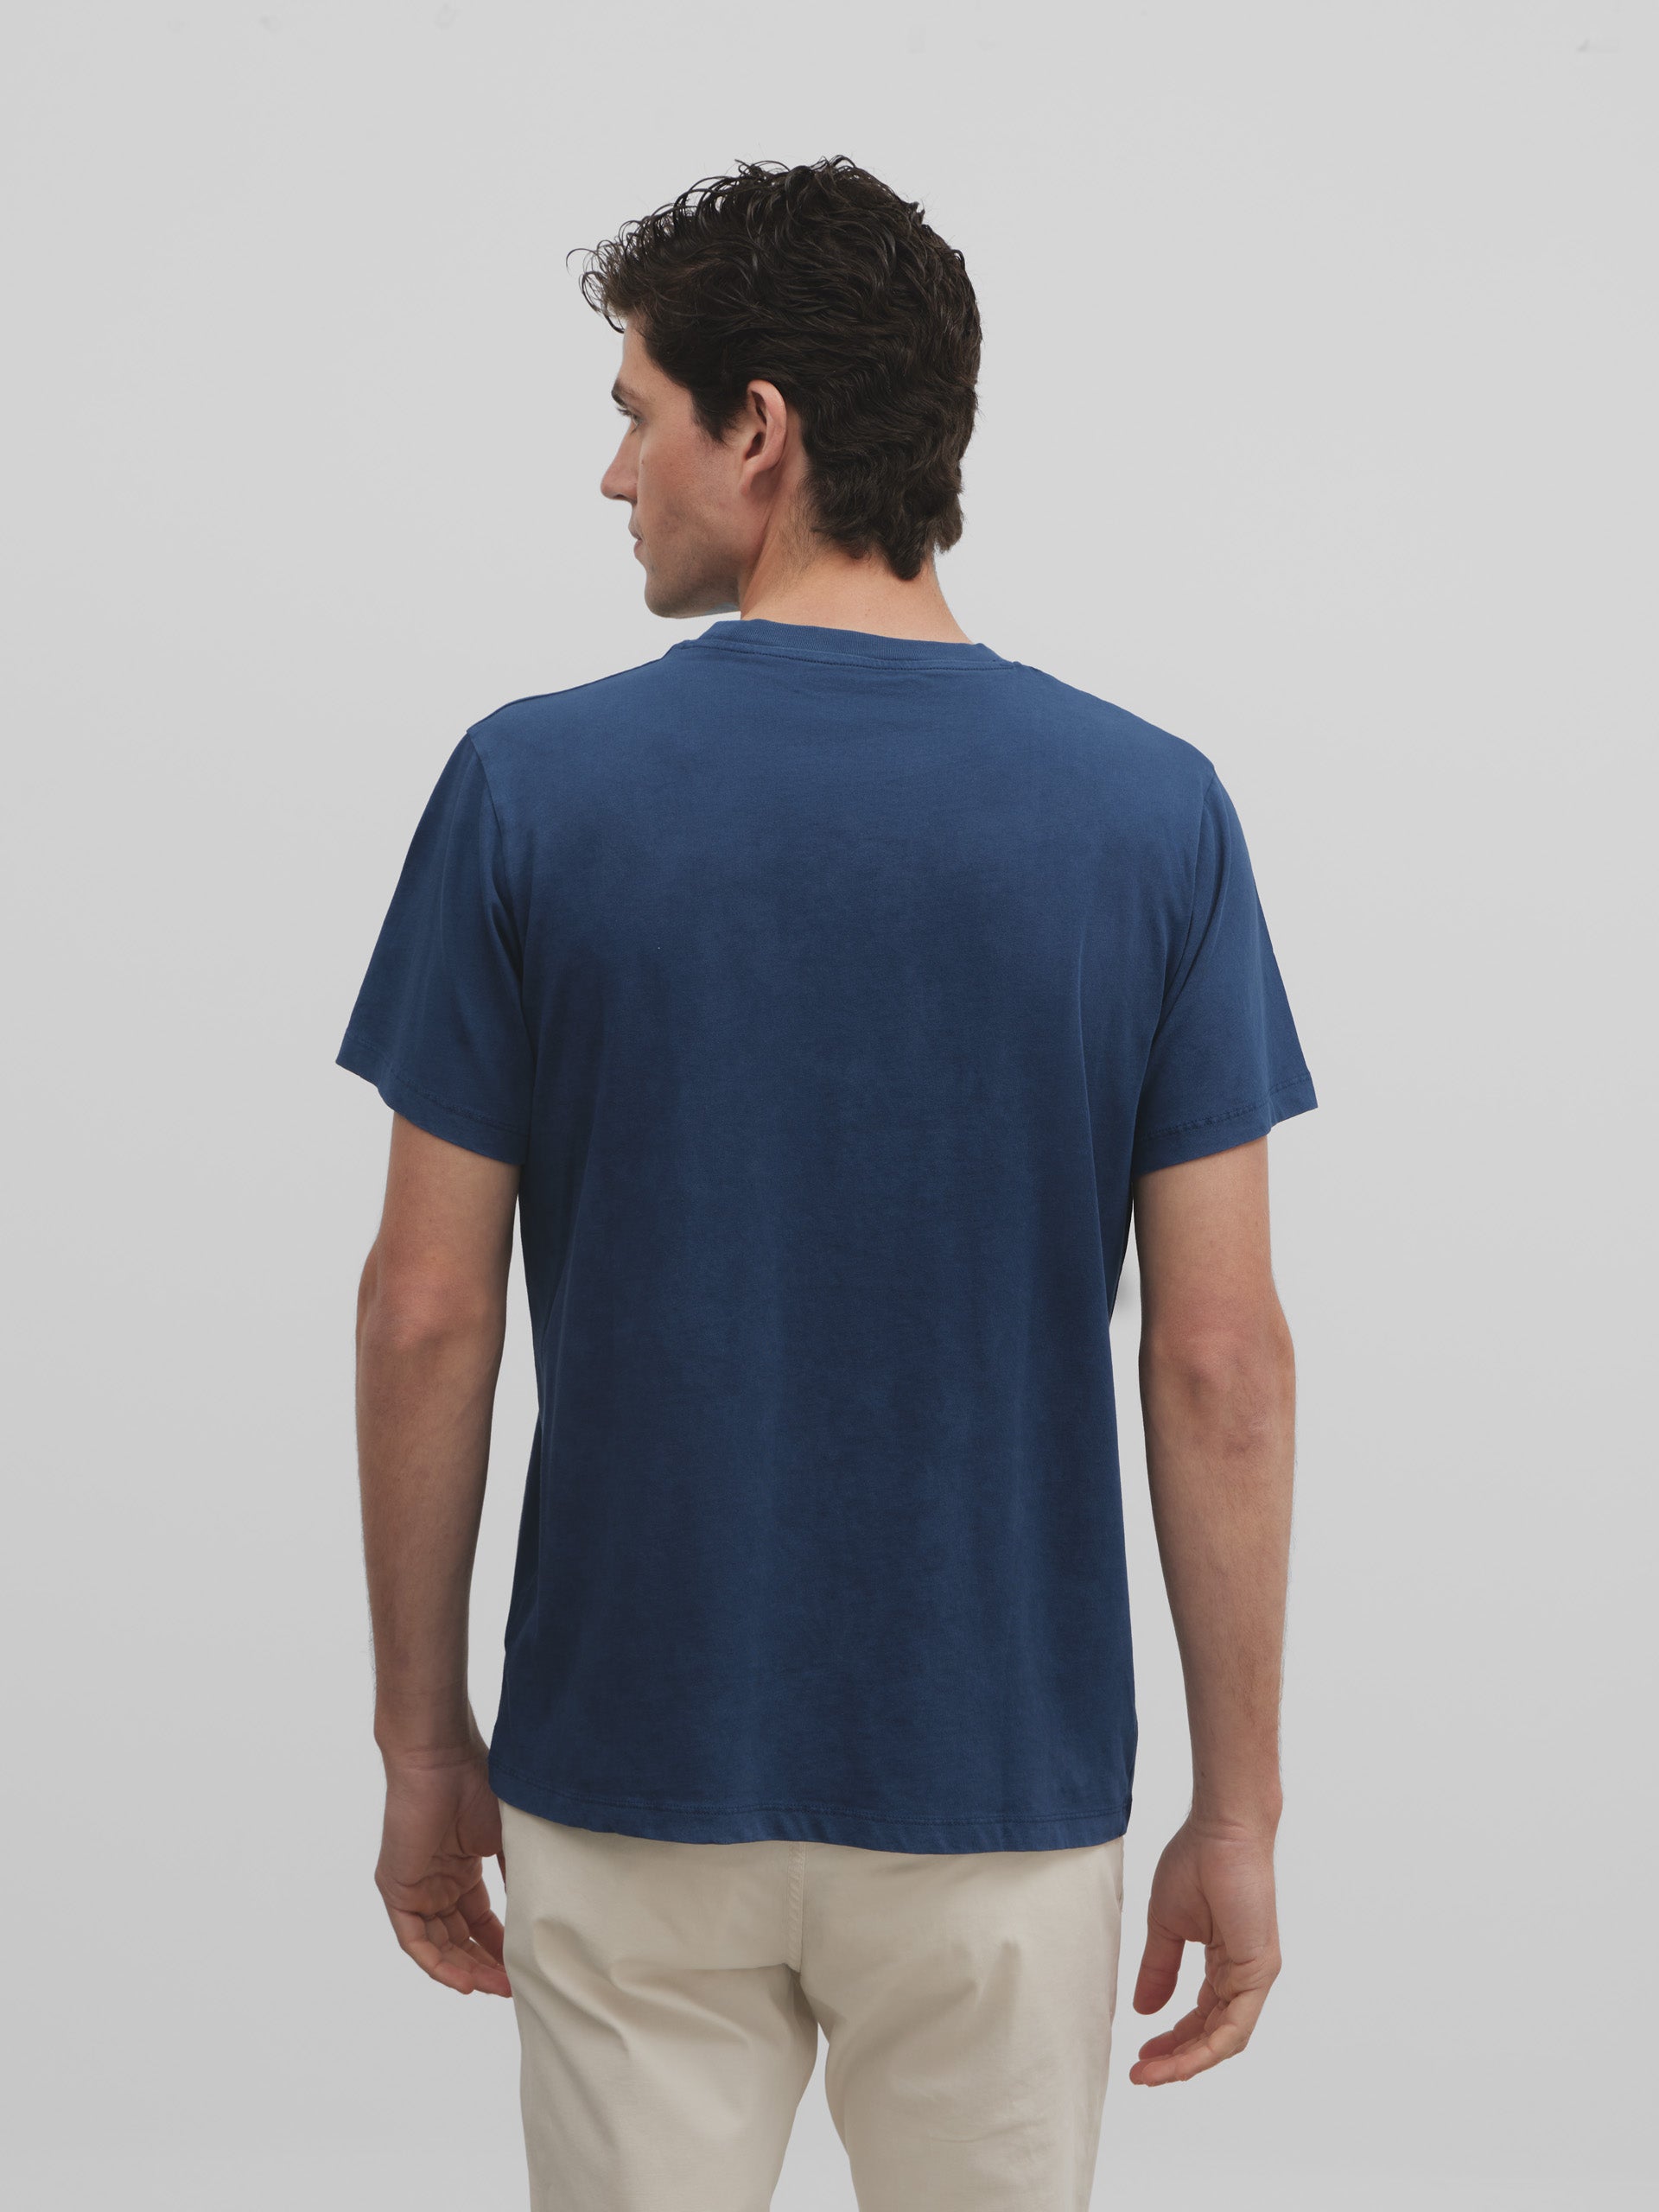 Plain Silbon T-shirt with blue pocket